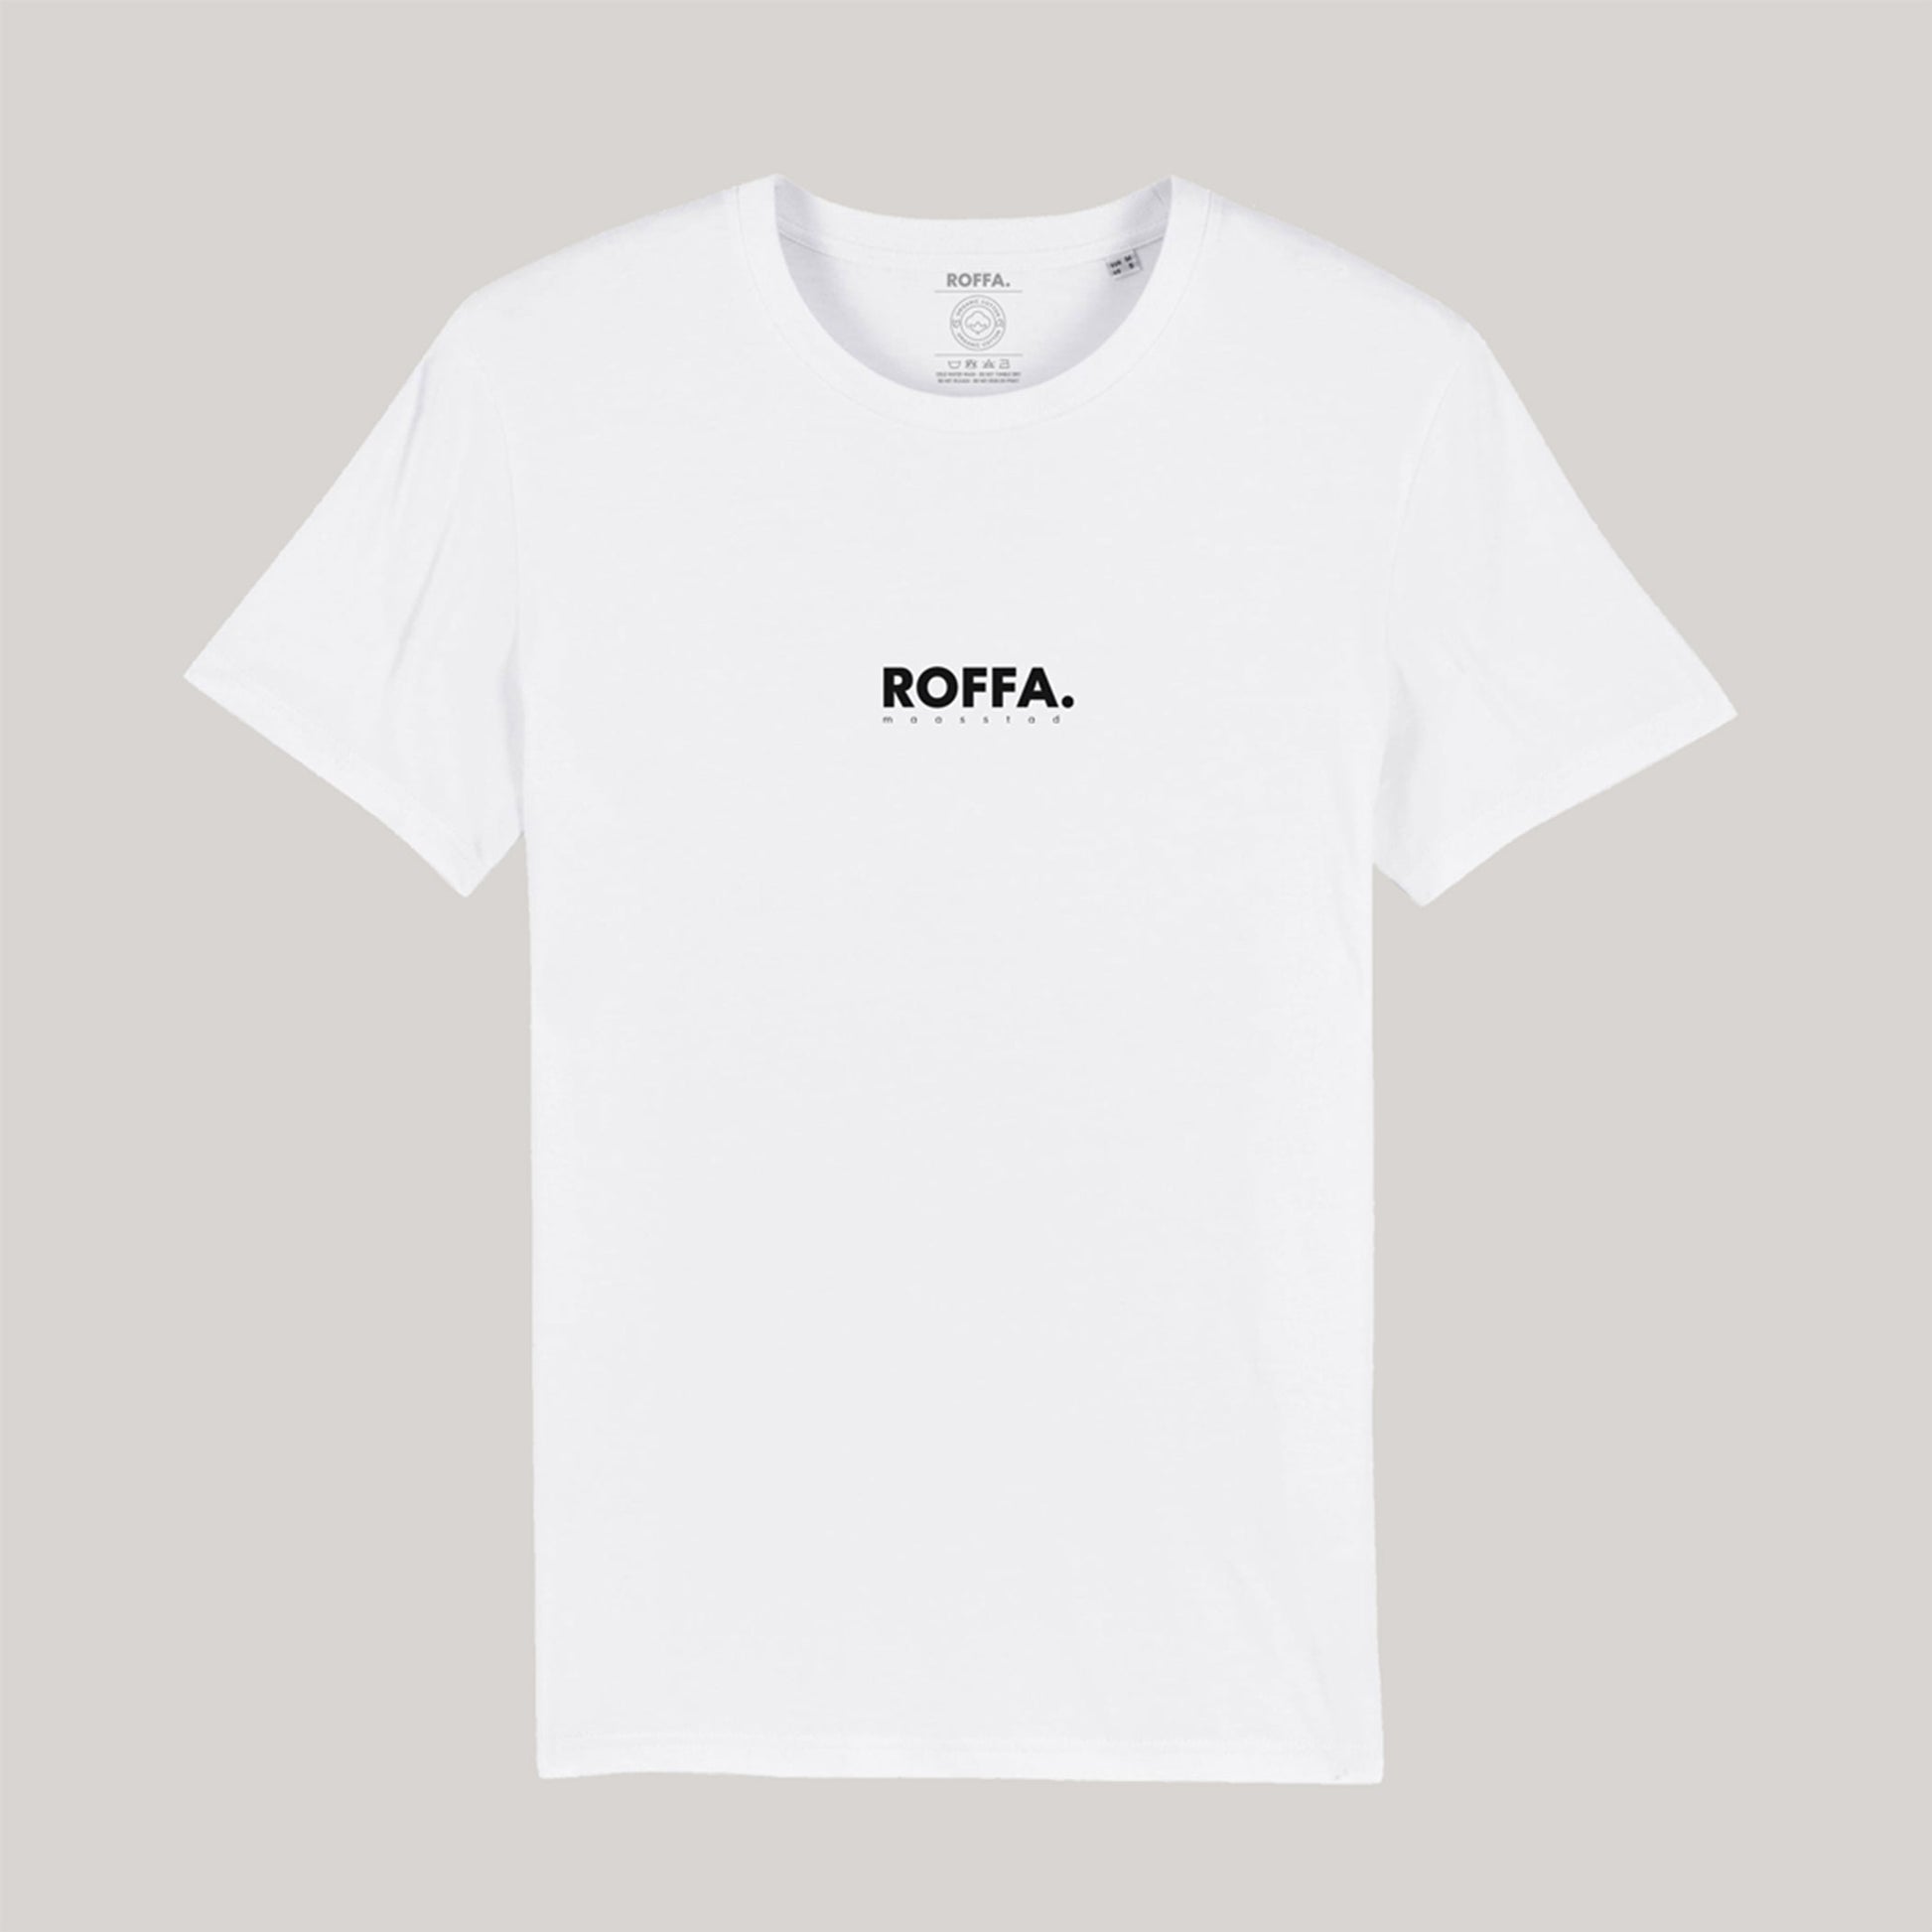 Wit t-shirt met groot ROFFA. rotterdam logo